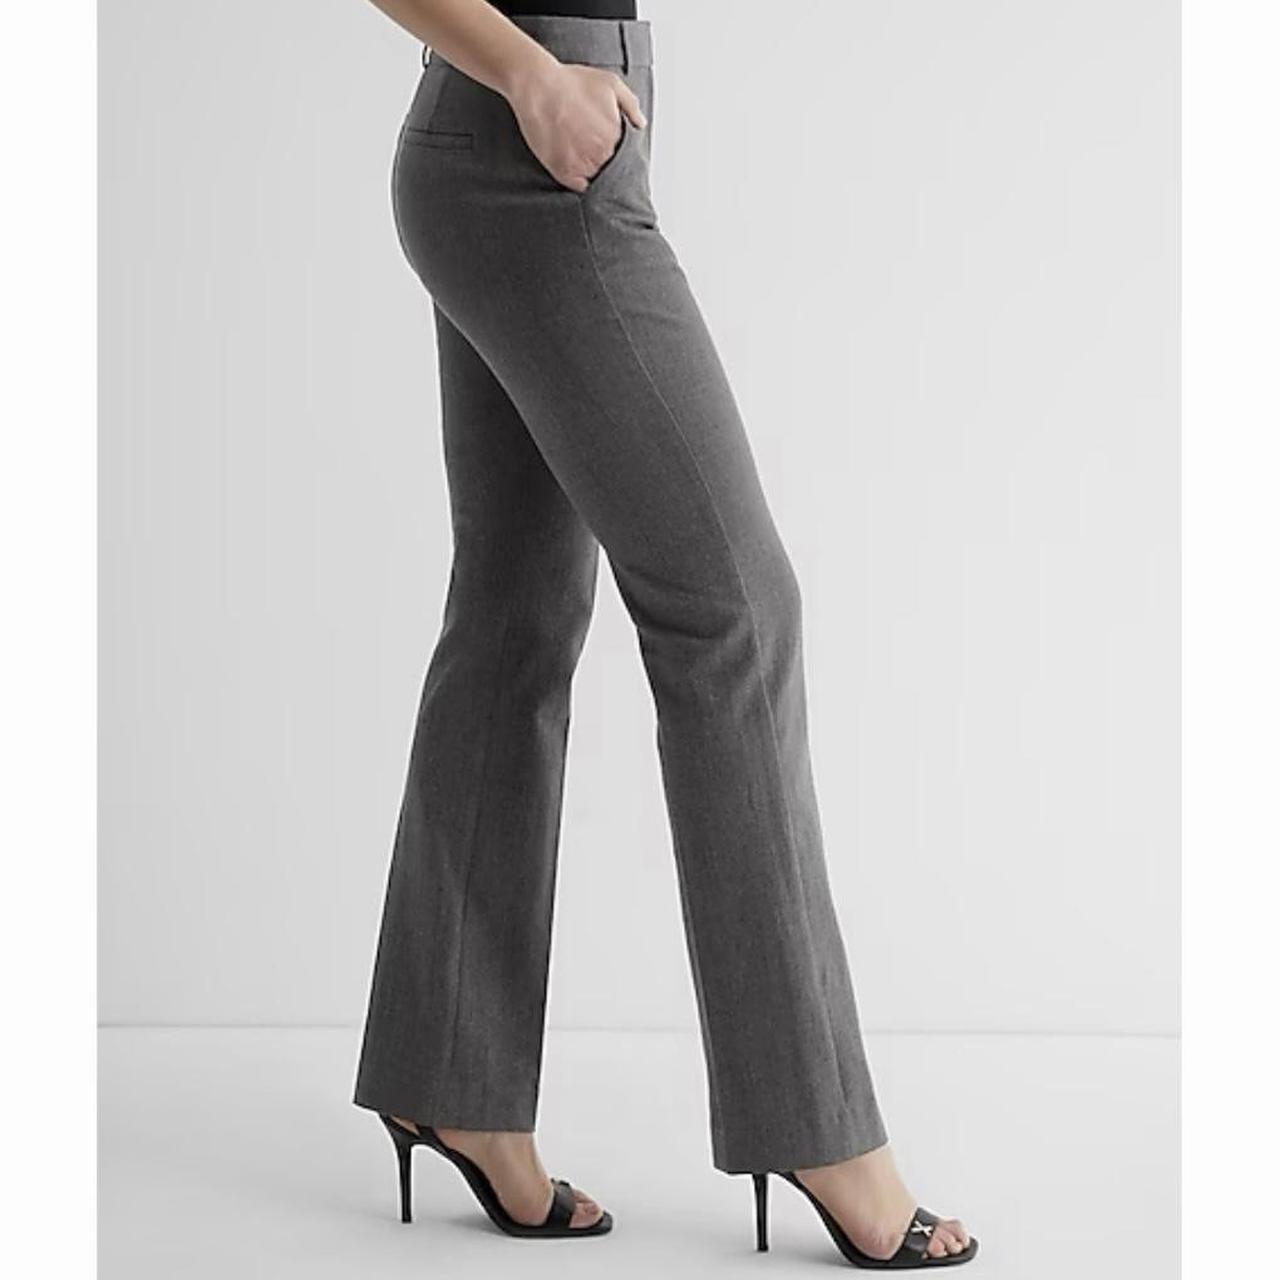 Buy Grey Pants for Women by DeMoza Online | Ajio.com